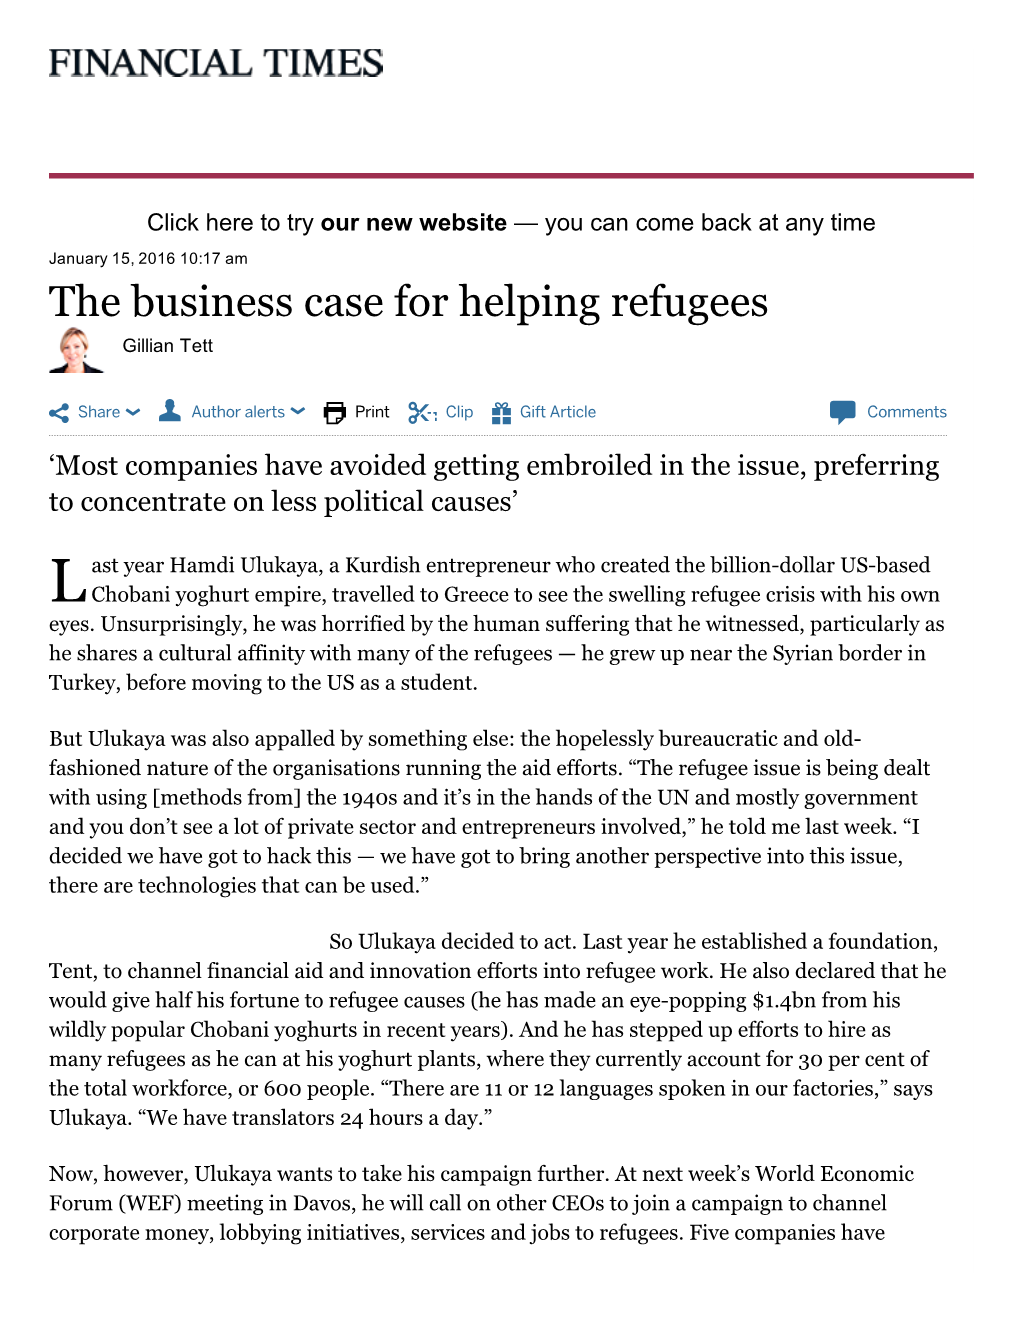 The Business Case for Helping Refugees Gillian Tett